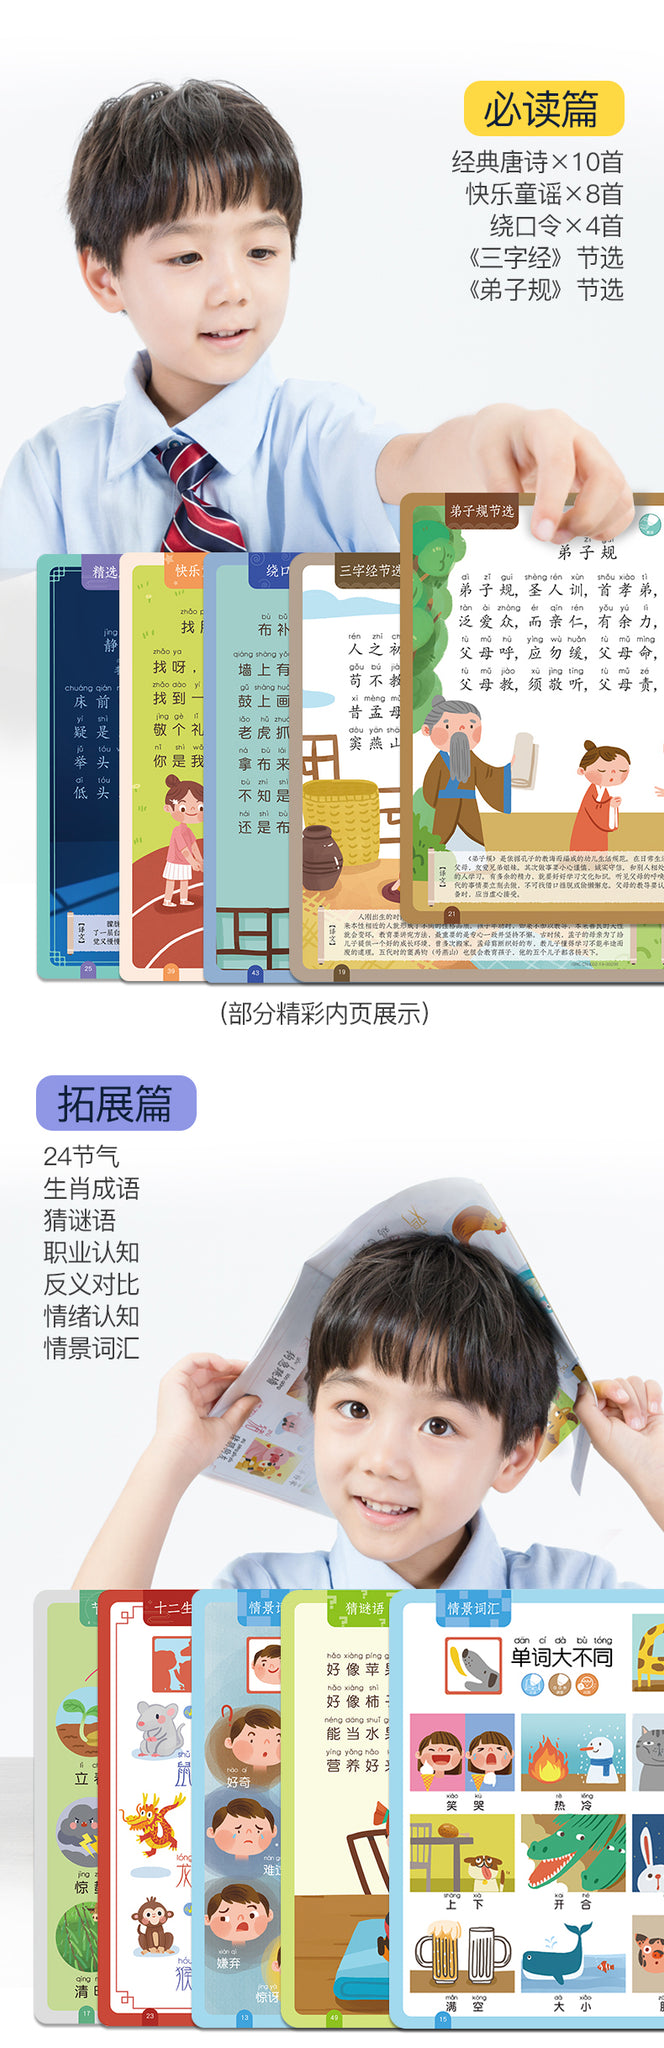 MINI ENCYCLOPAEDIA of pinyin with a smart pen | Mandarin Phonics Study 拼音学习好伙伴